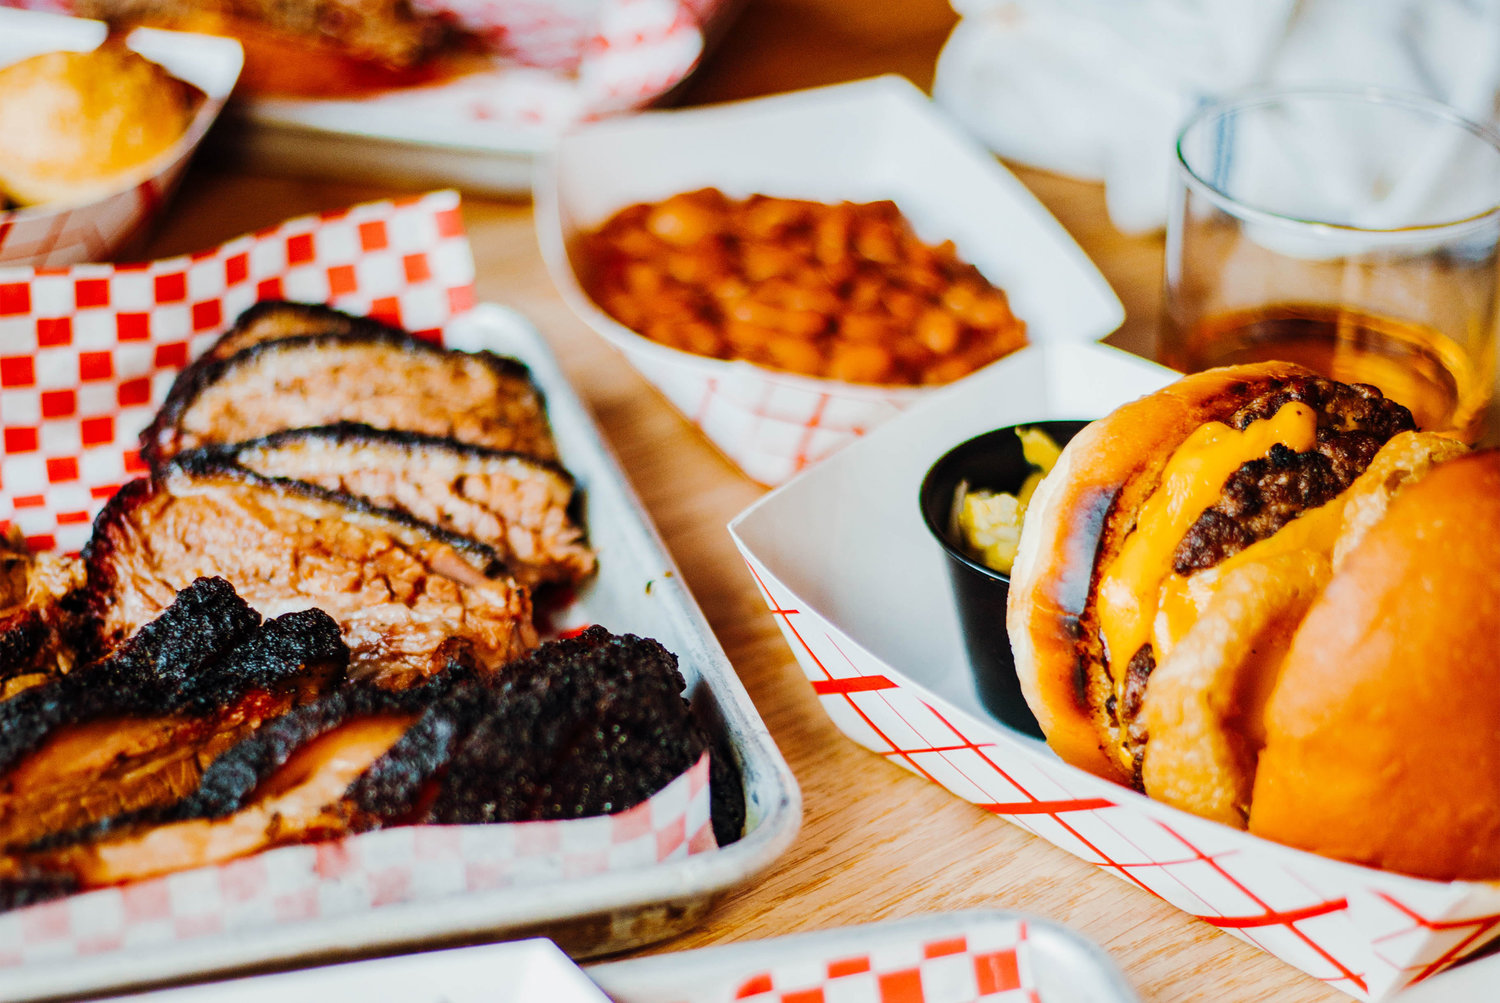 Find Texas-style BBQ with a Rhode Island twist at Durk’s Bar-B-Q